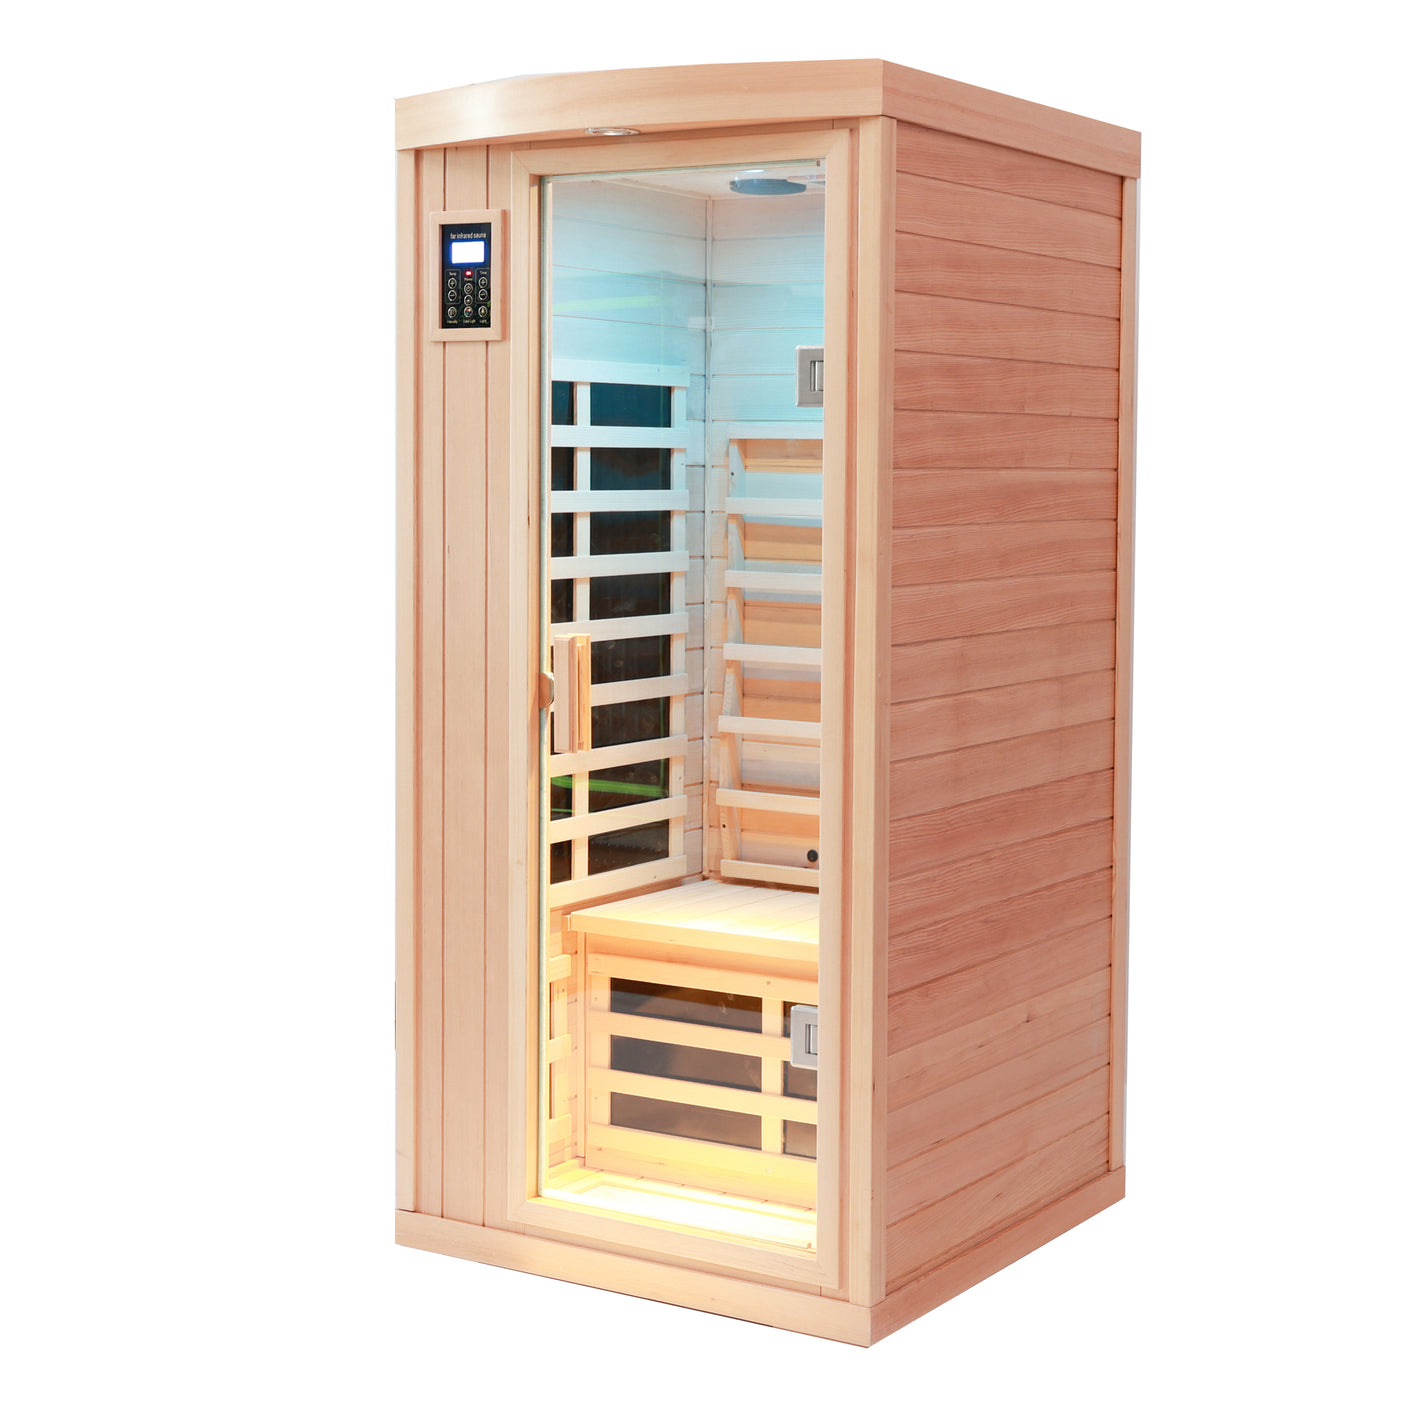 One-person hemlock sauna room Far infrared plus ceramic tube heating Indoor sauna room for one person